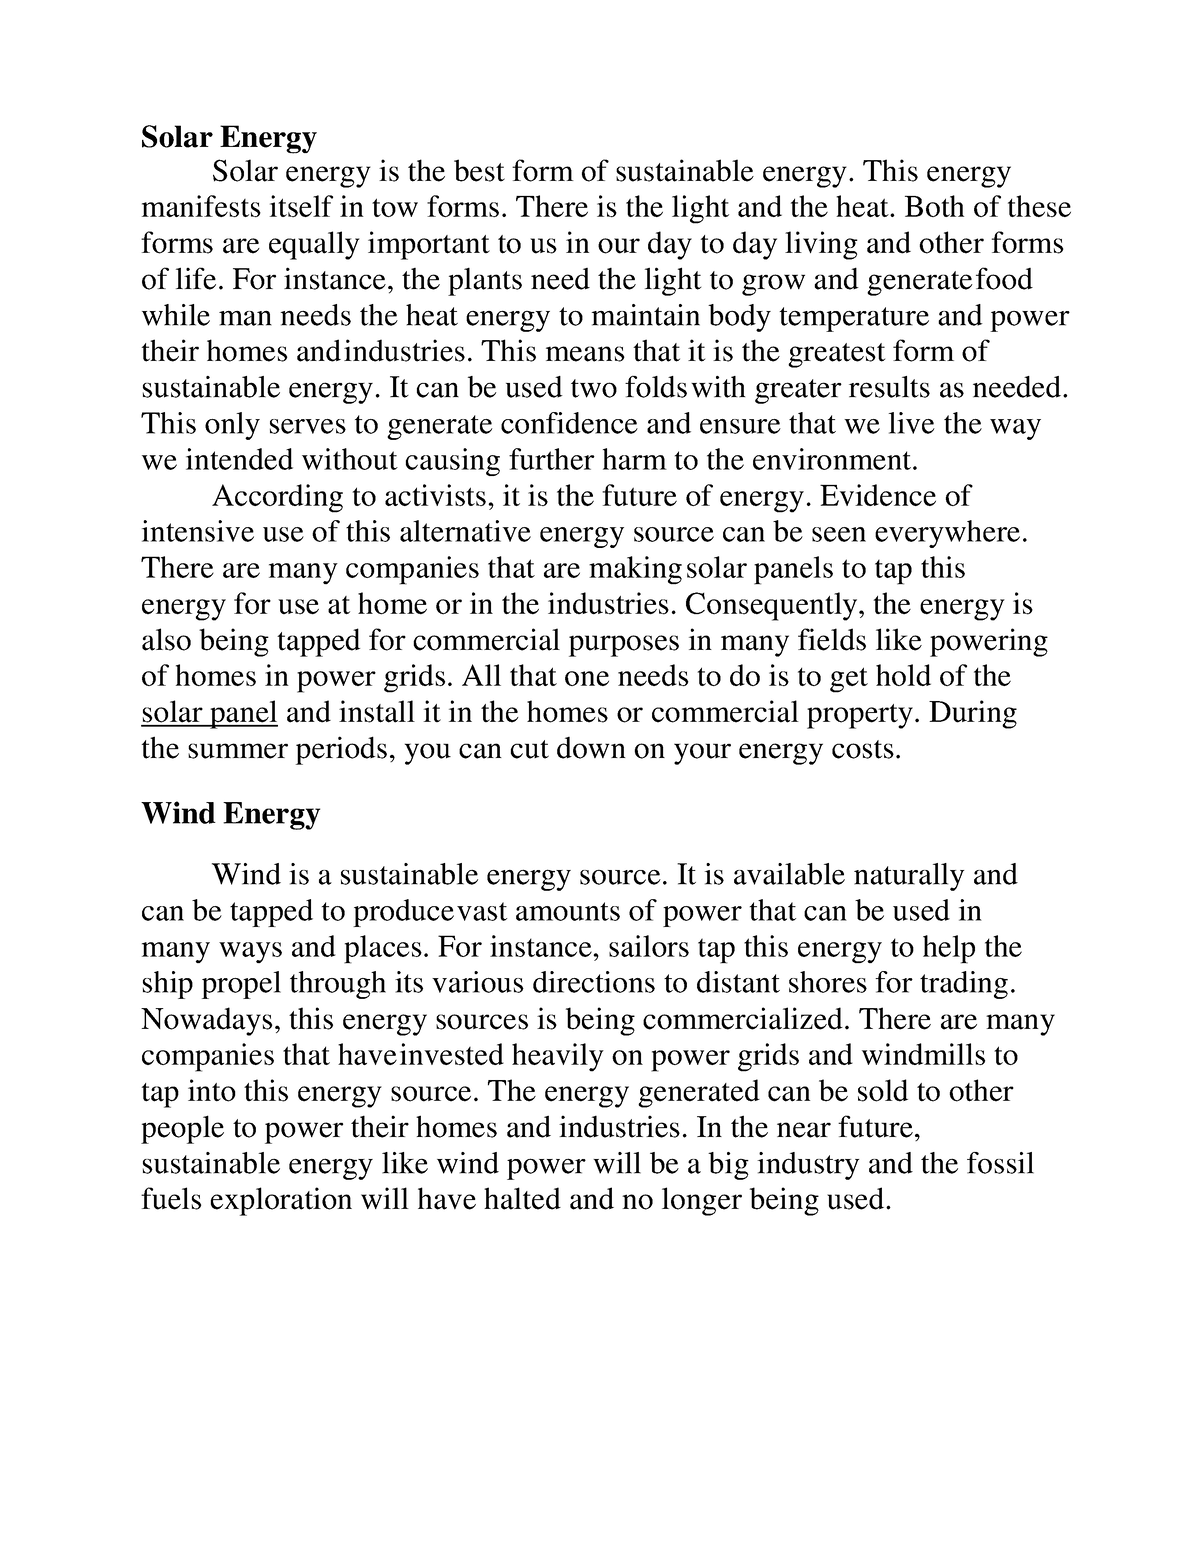 phd dissertation on solar energy